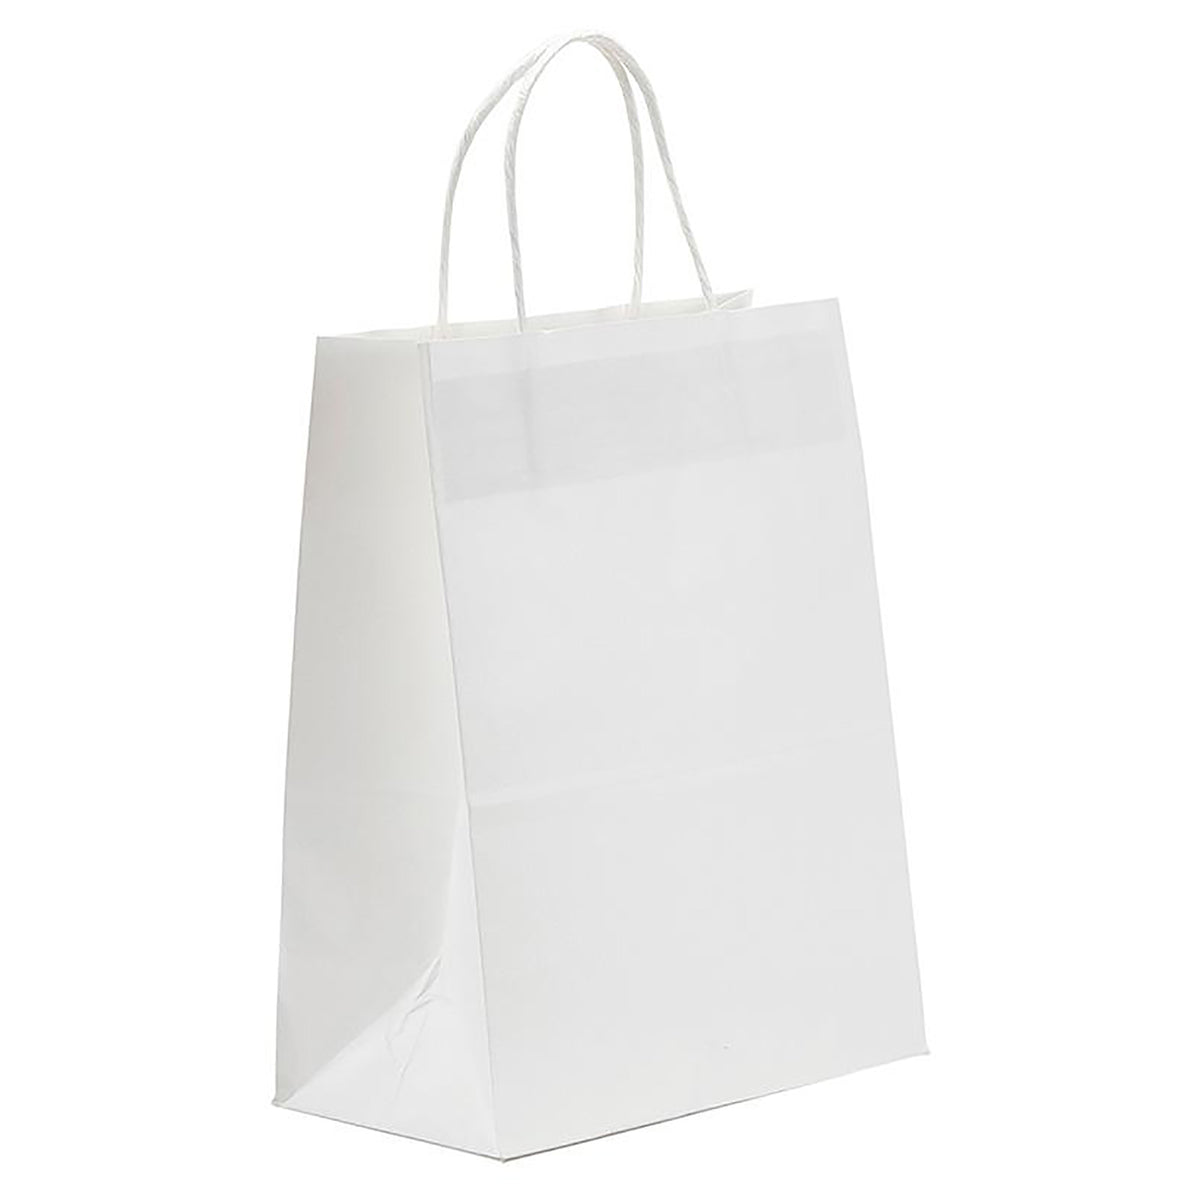 Buy Wholesale Paper Bags & Eurototes